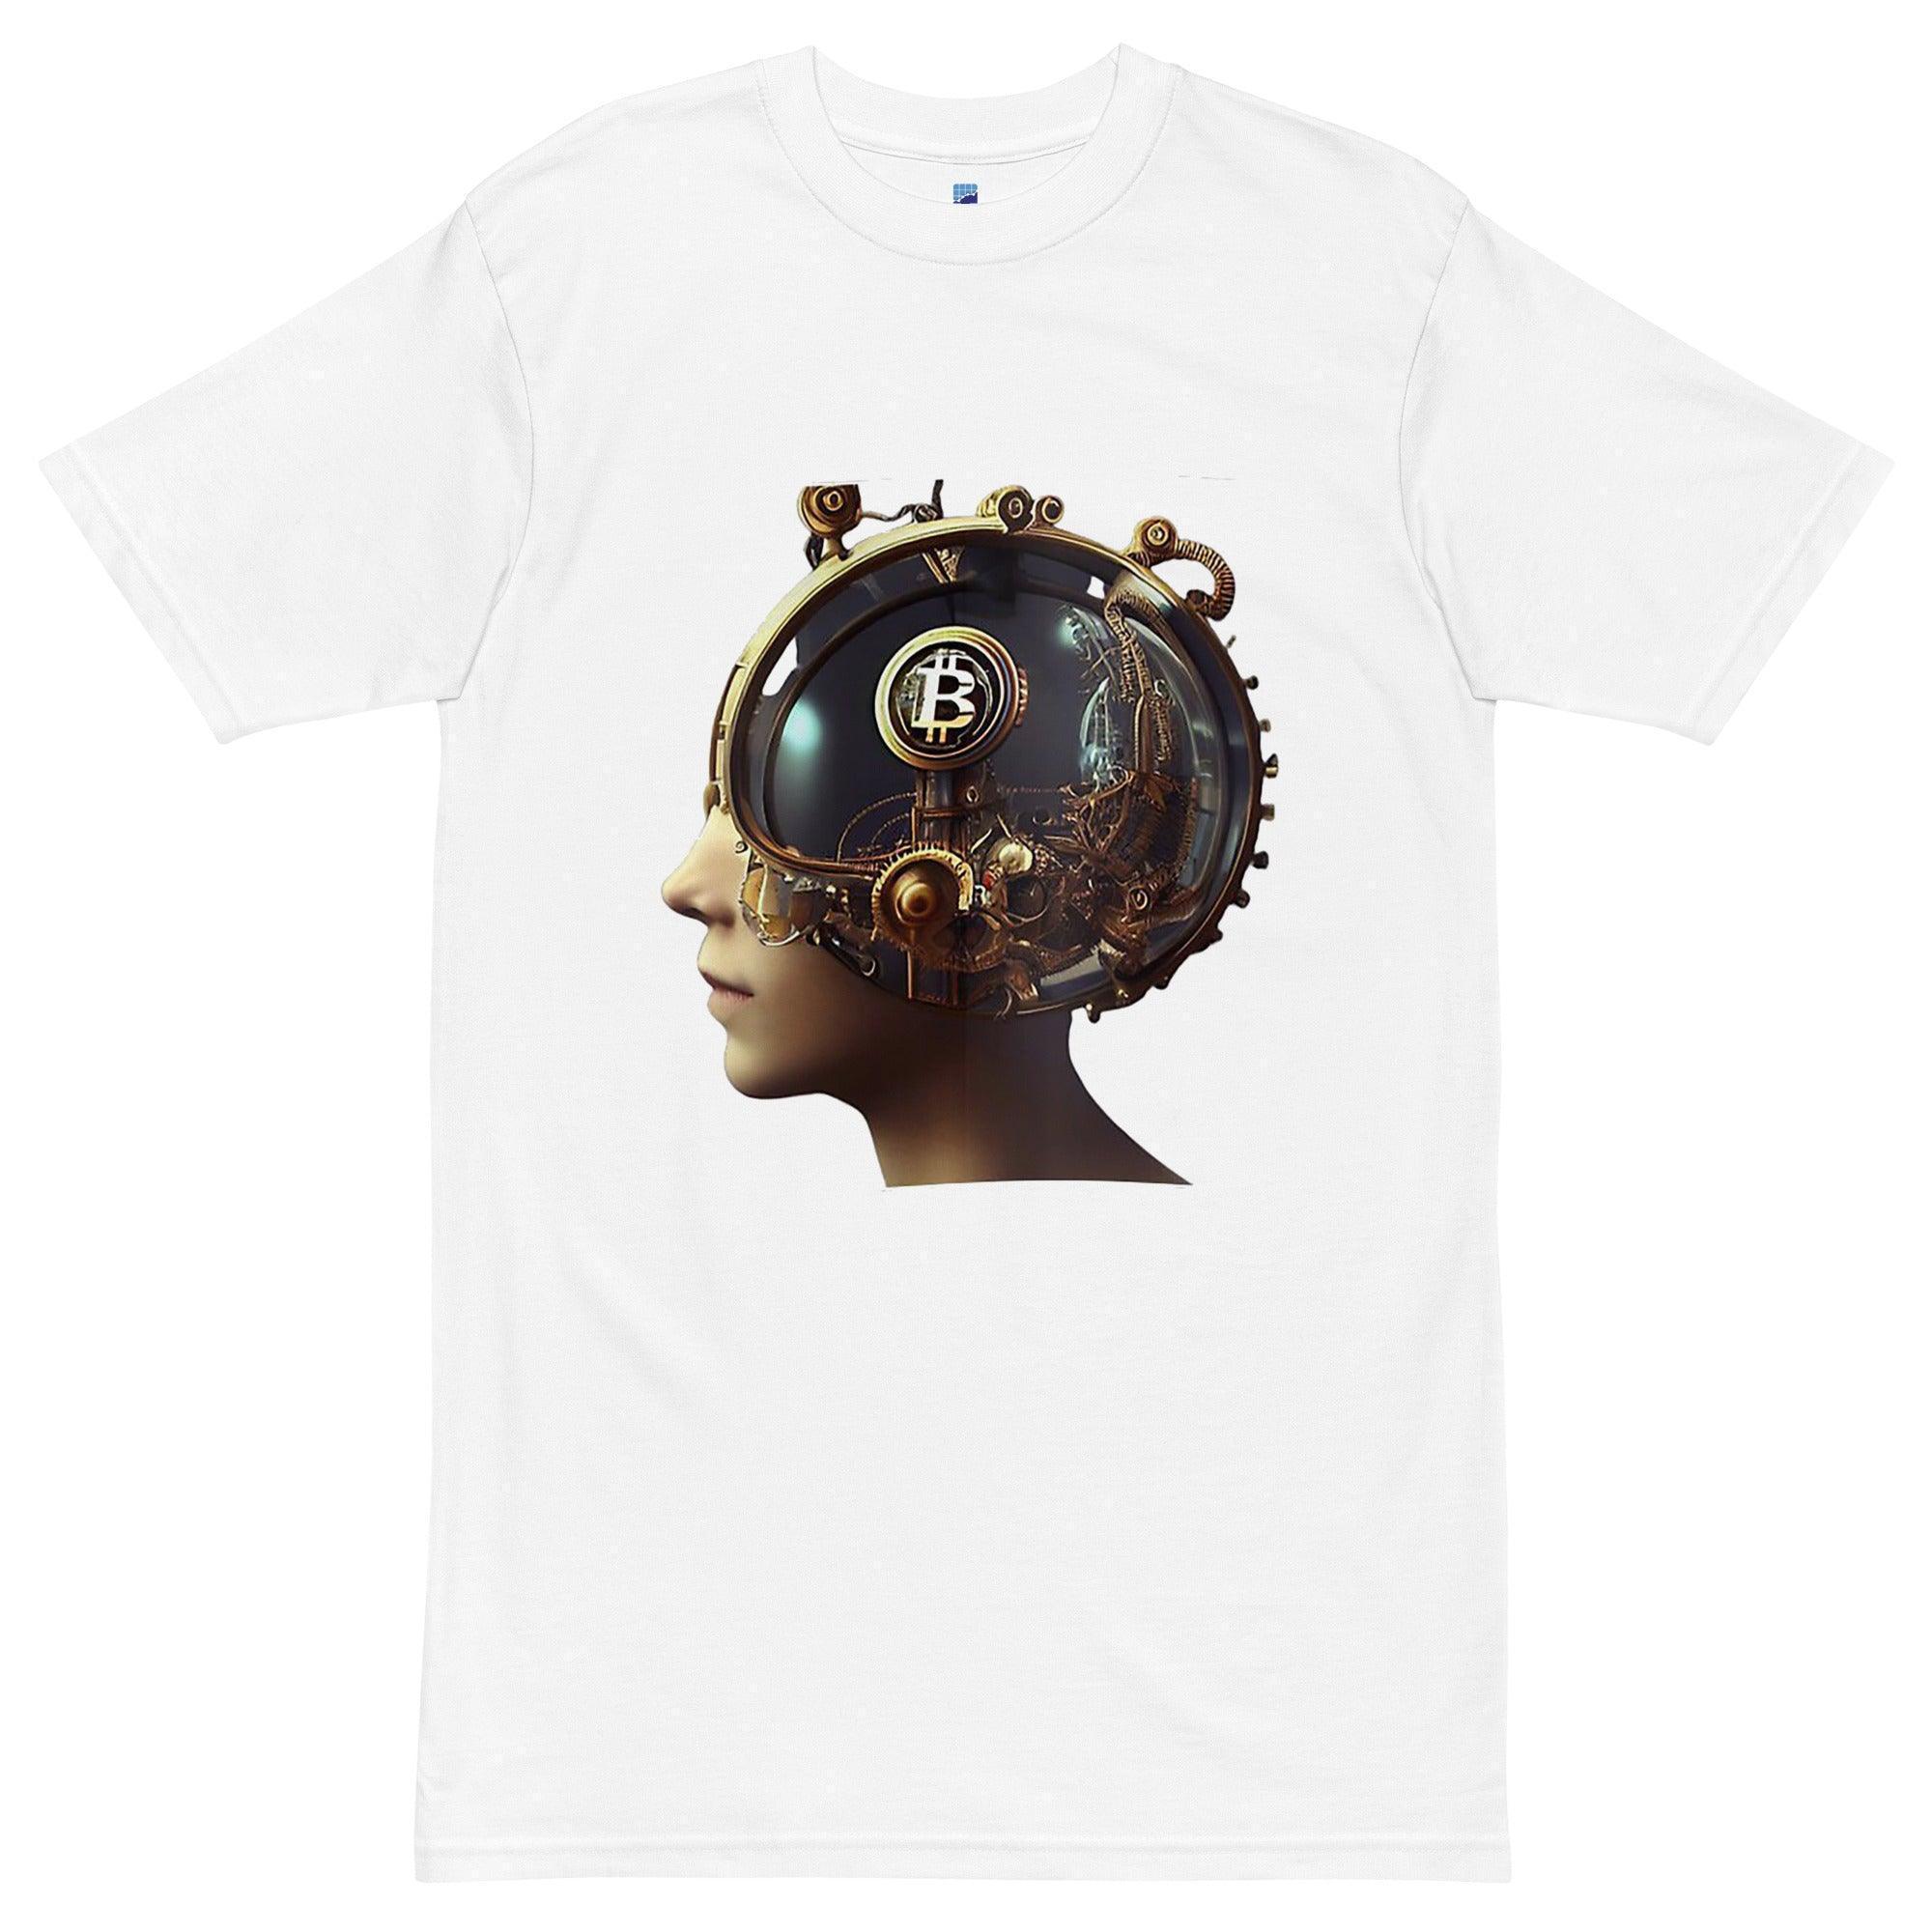 Bitcoin Futuristic Lady T-Shirt - InvestmenTees